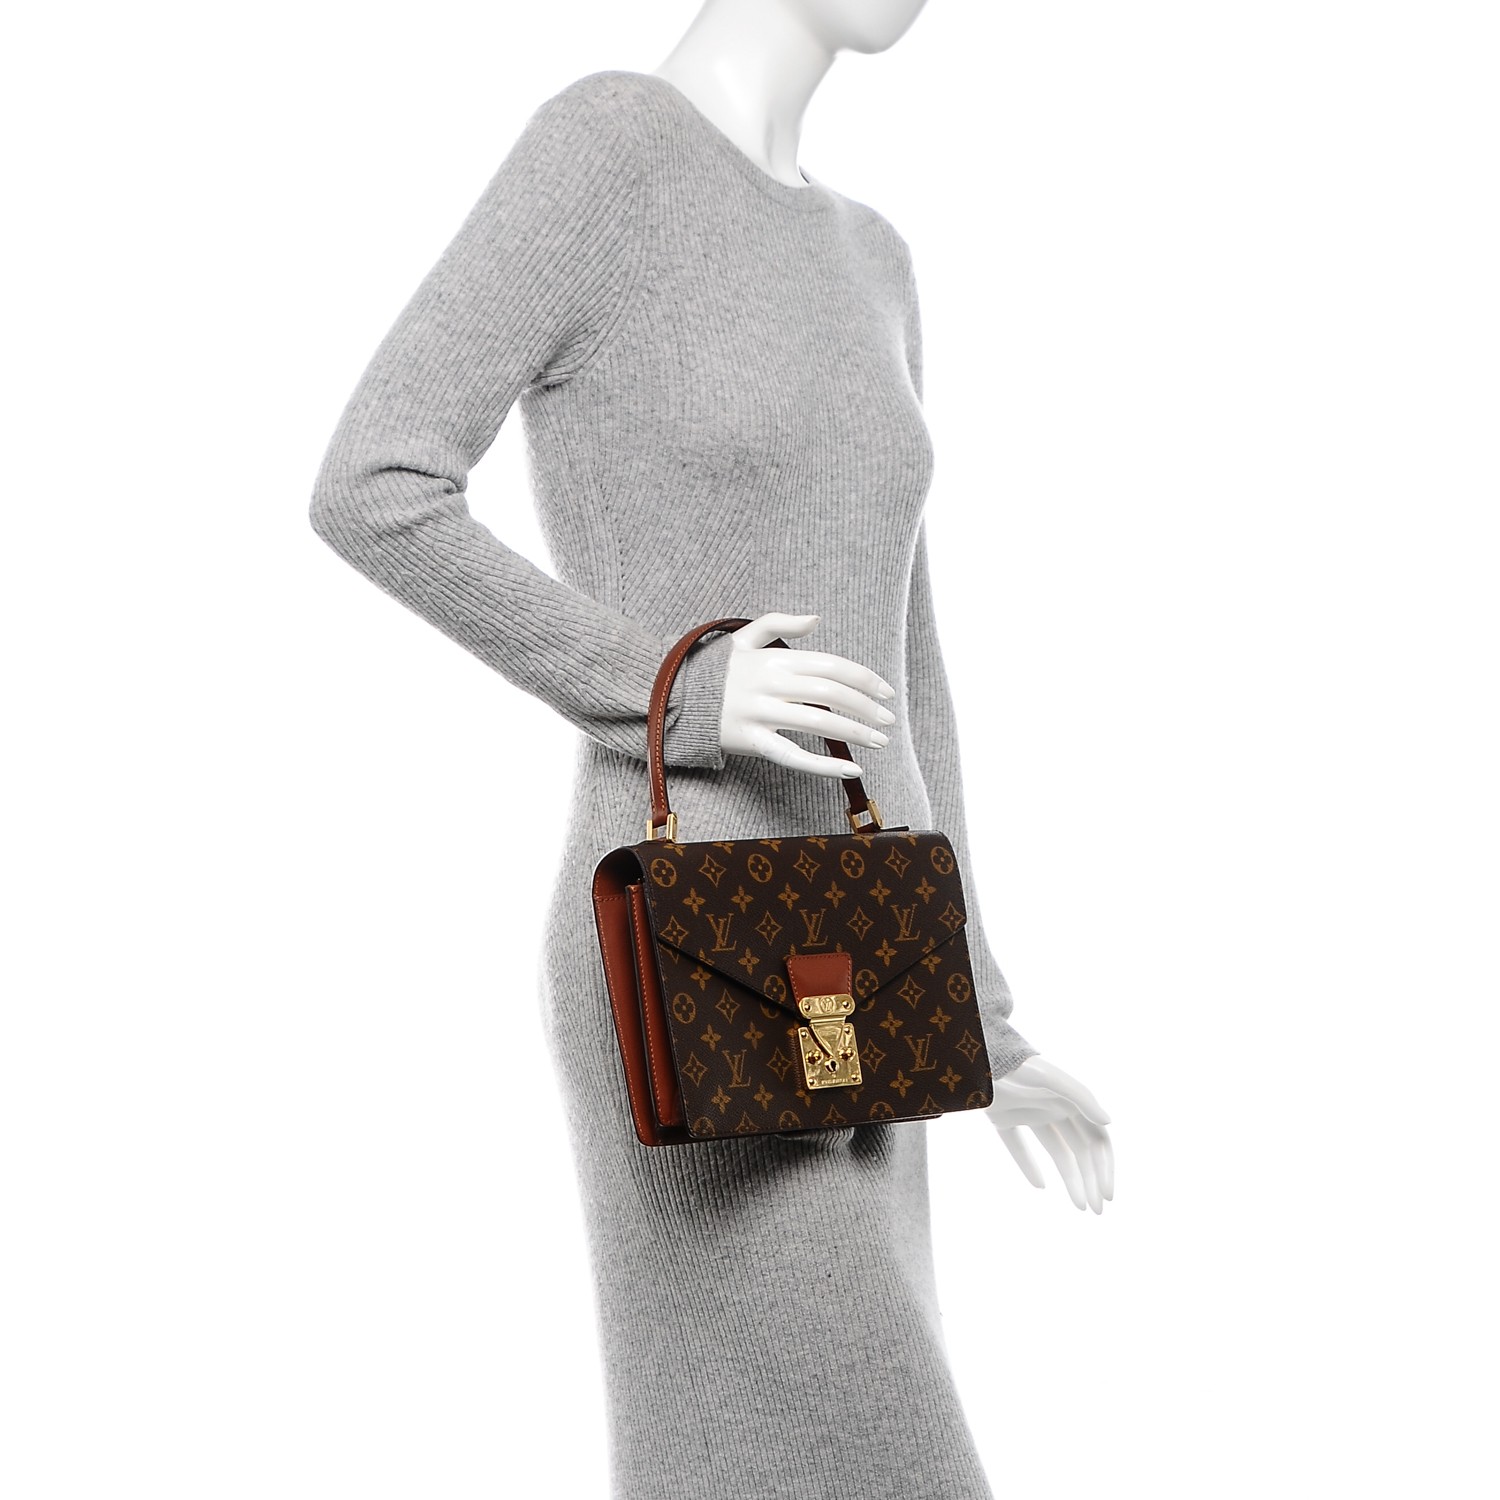 Buy Authentic Louis Vuitton Epi Monceau Red Leather Handbag Push Online in  India 